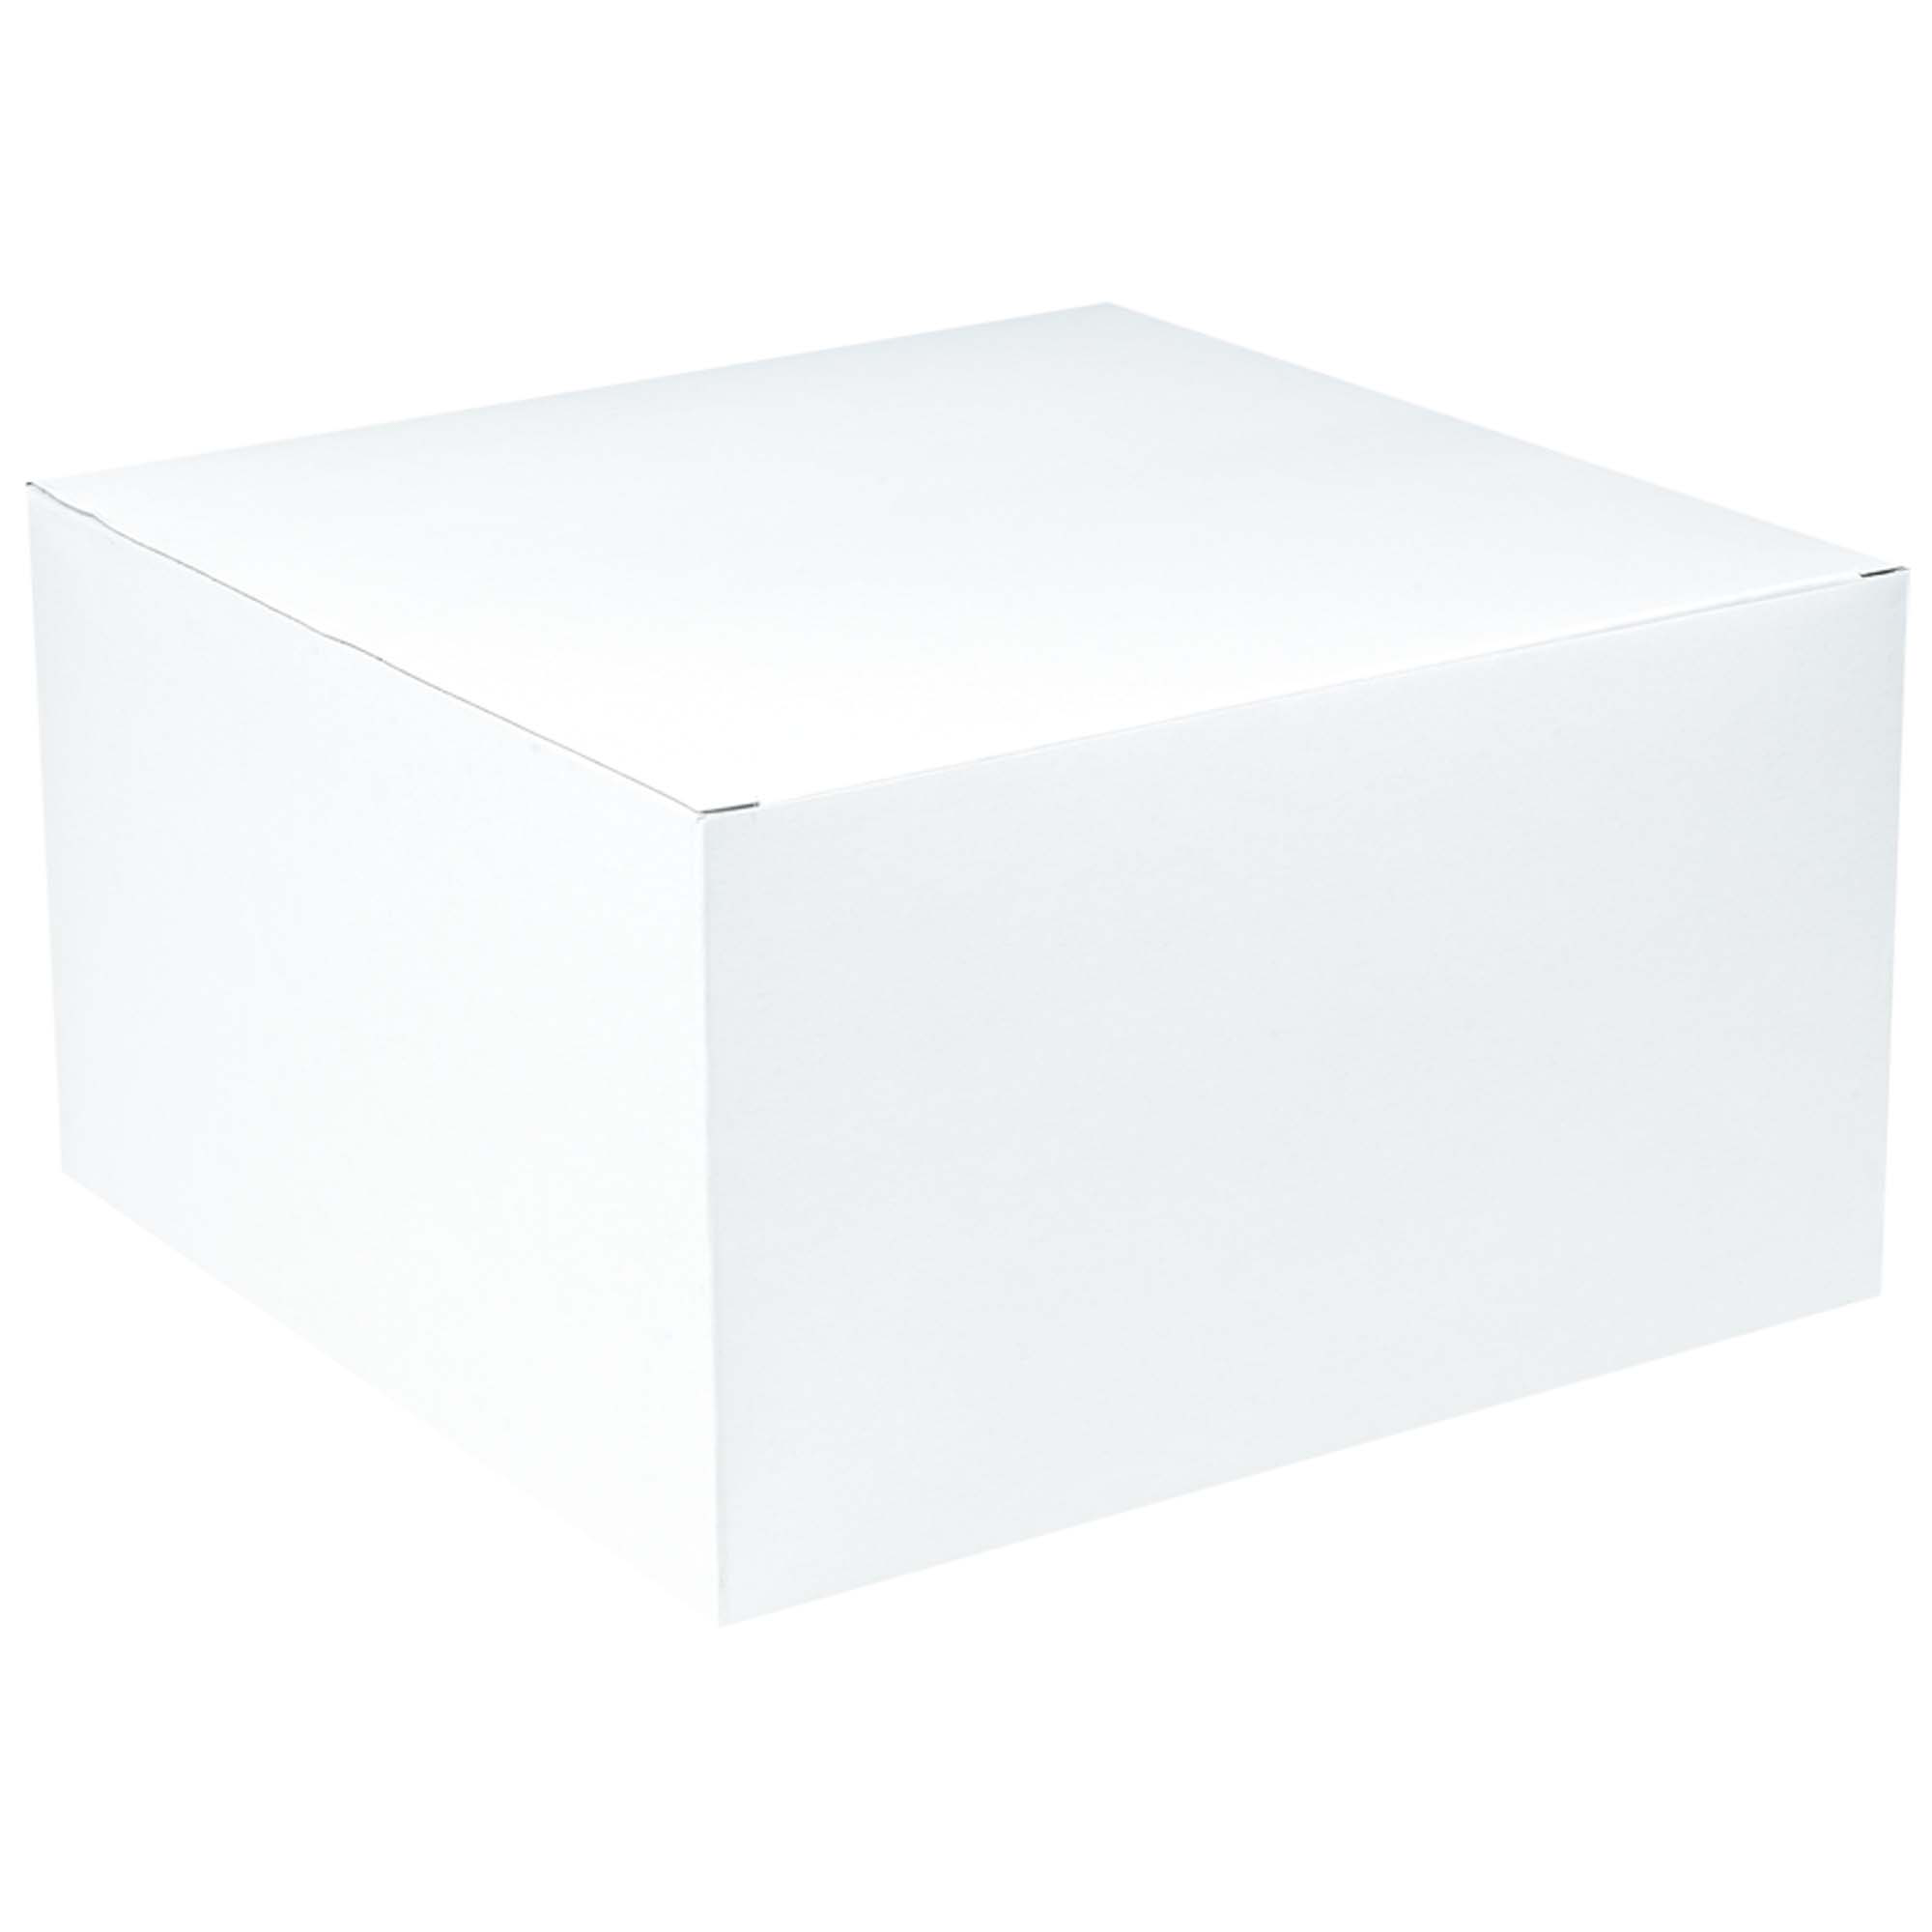 White Gift Box 9 x 9in